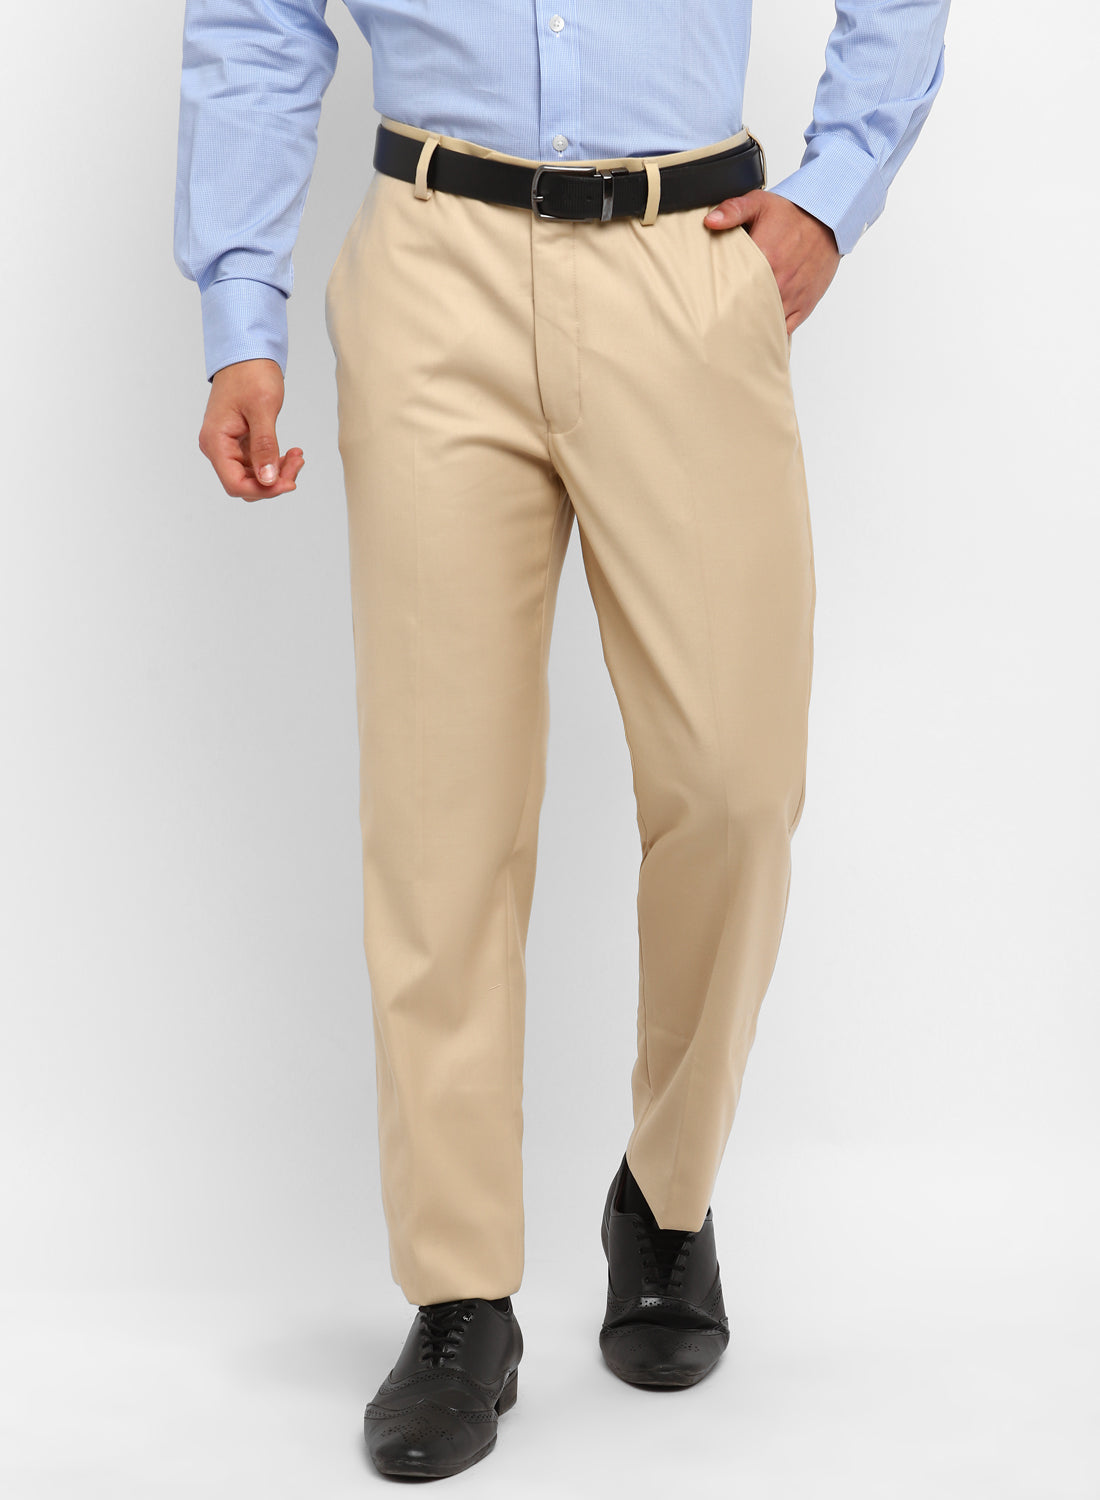 Buy Khaki Trousers  Pants for Men by LOUIS PHILIPPE Online  Ajiocom